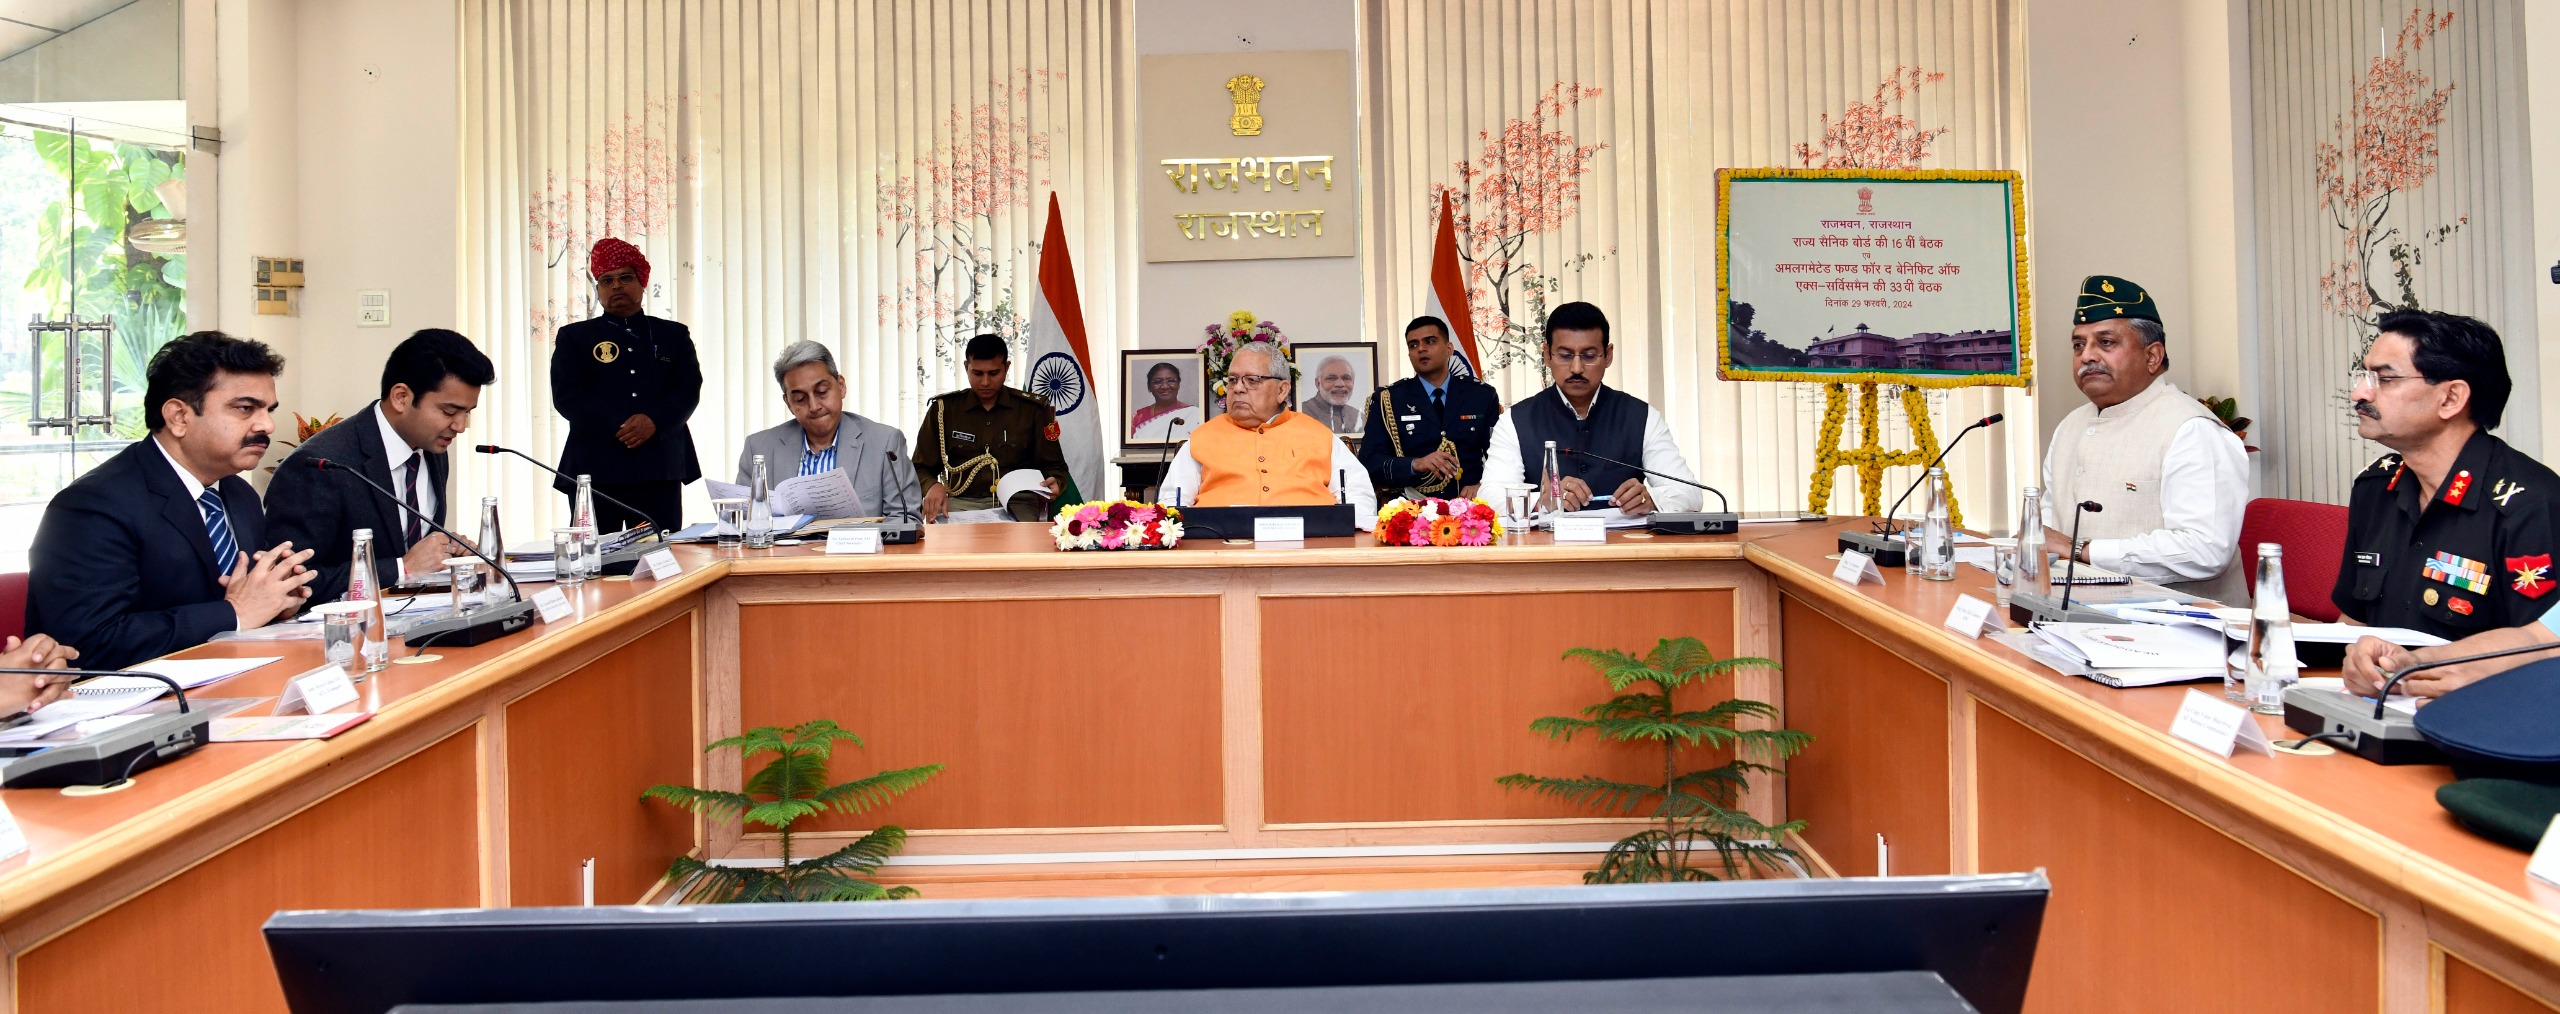 Hon'ble Governor has chaired meeting of Rajya Sainik Board at Raj Bhawan, Jaipur.